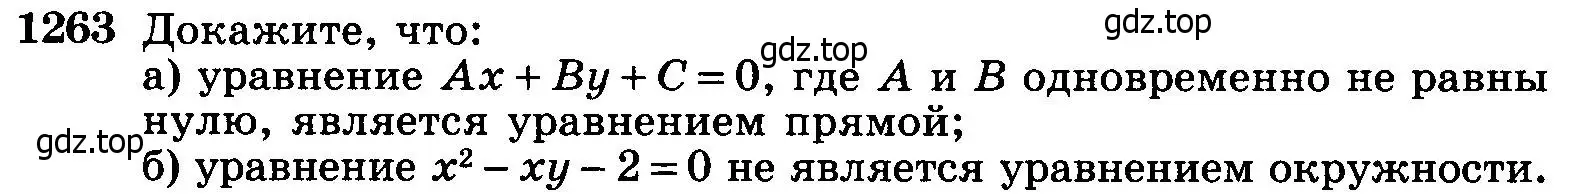 Условие номер 1263 (страница 330) гдз по геометрии 7-9 класс Атанасян, Бутузов, учебник